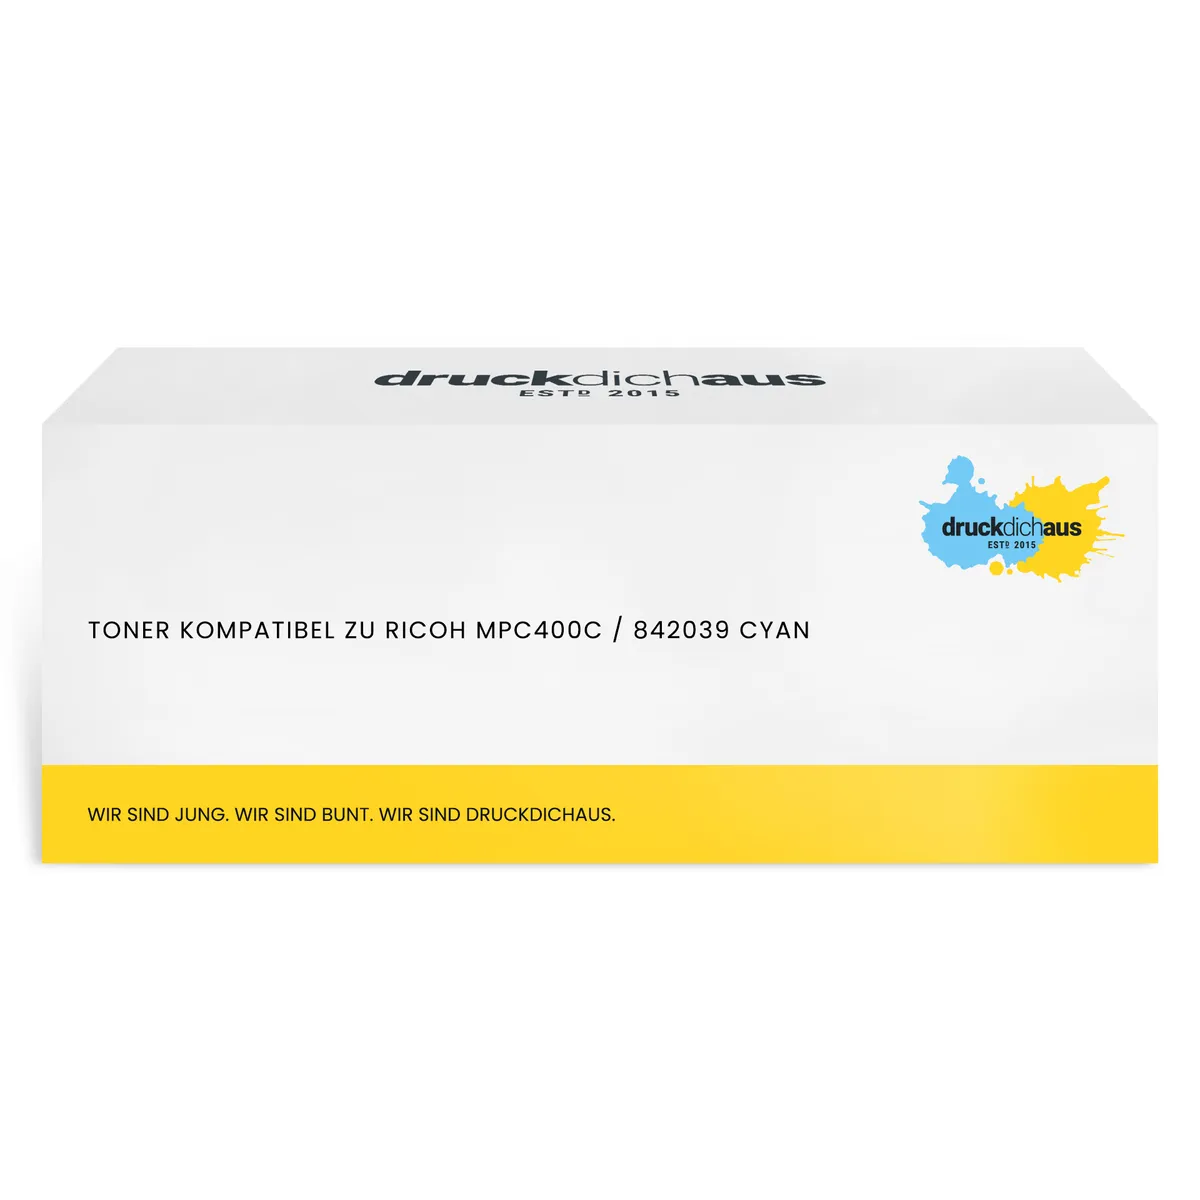 Toner kompatibel zu Ricoh MPC400C / 842039 cyan